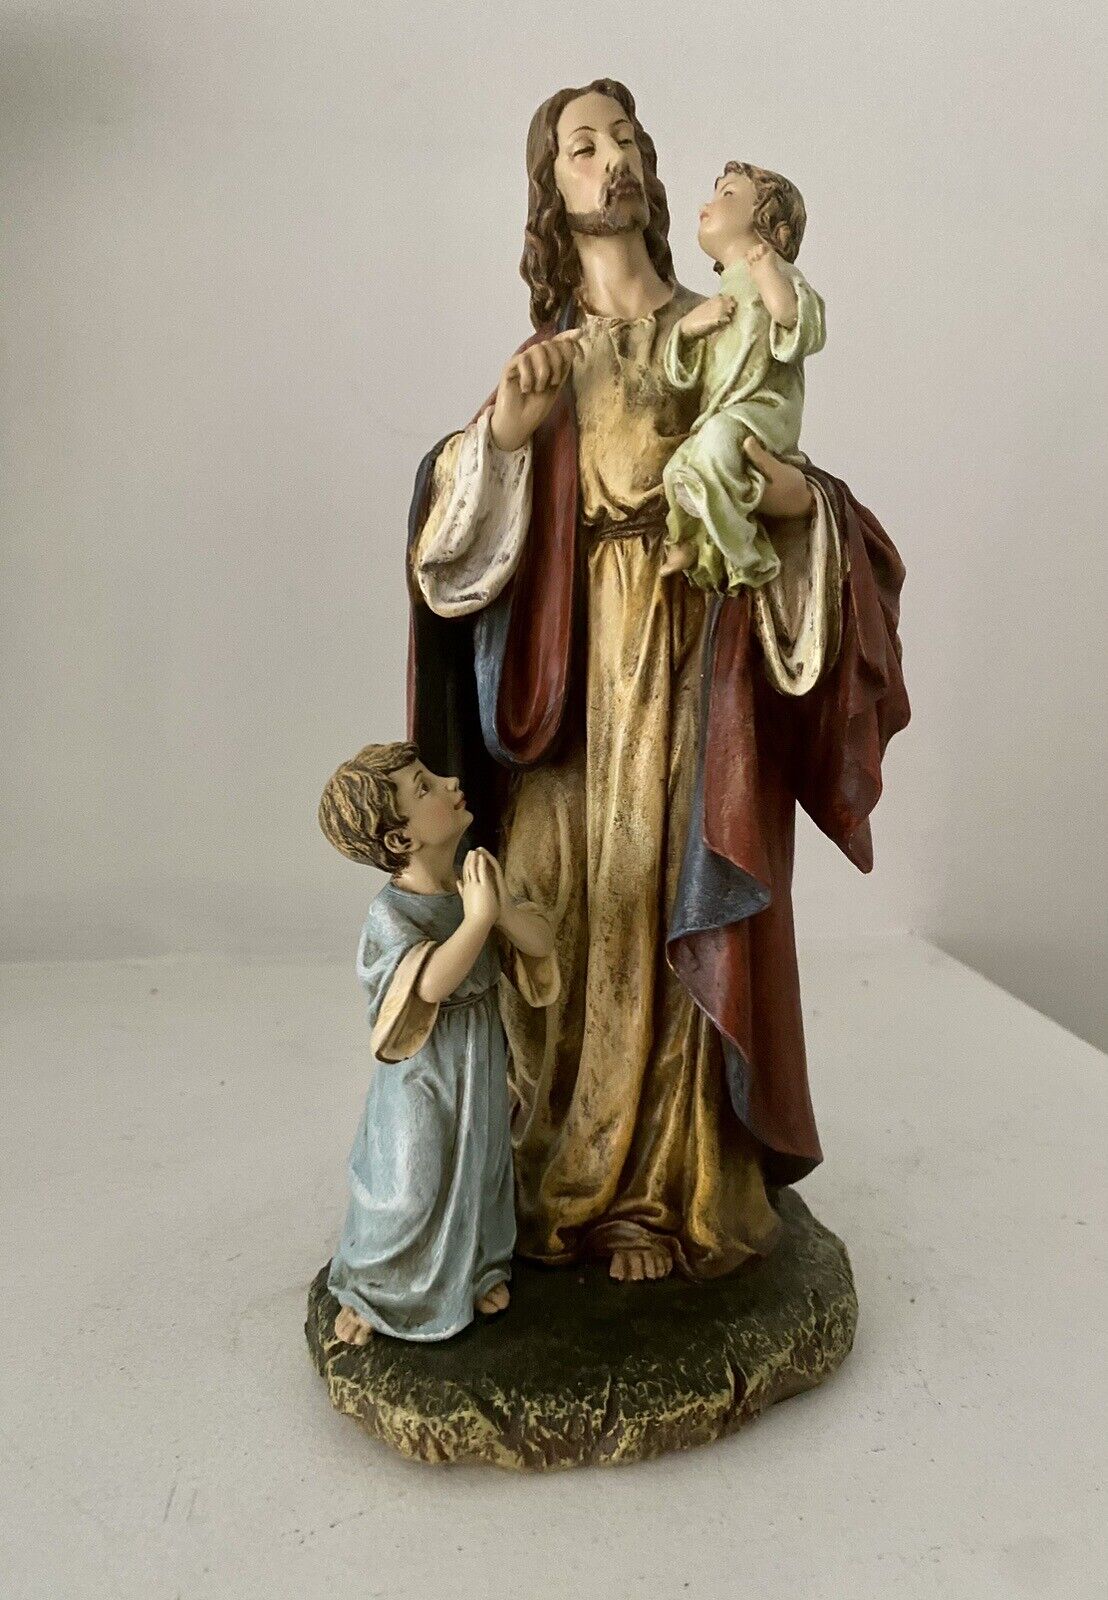 Joseph Studio Renaissance Collection “Jesus With Children” Statue With A Boo-boo